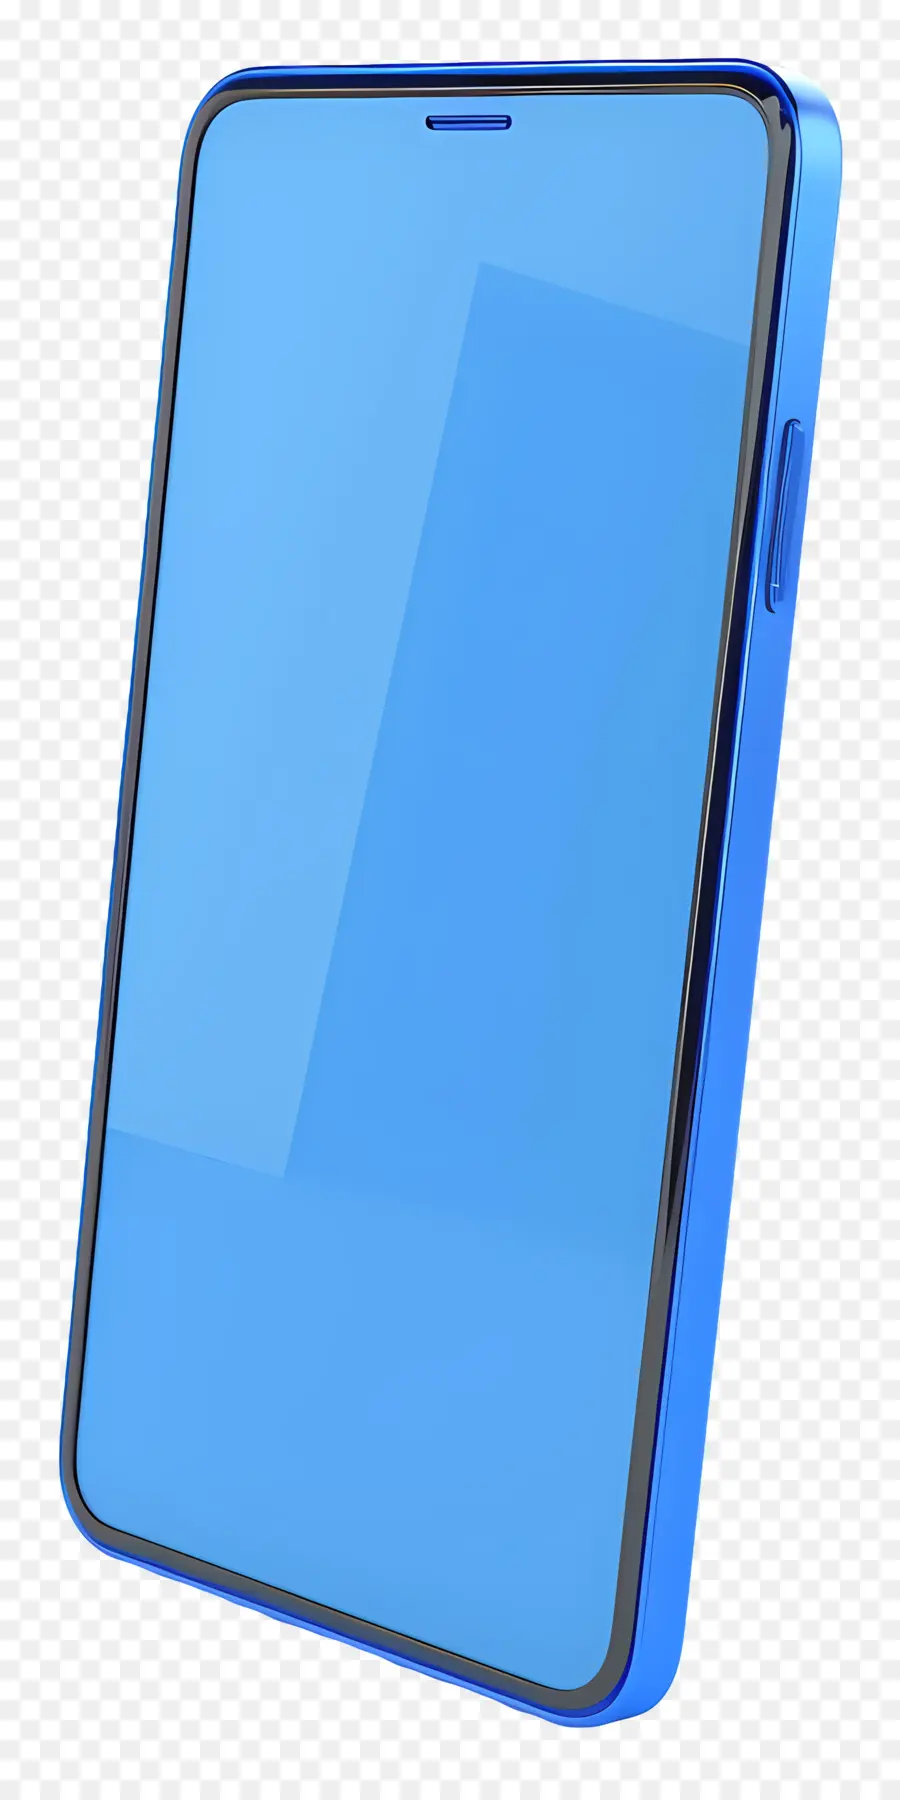 Metallrahmen - Blaues Smartphone mit Glasschirm und Metallrahmen